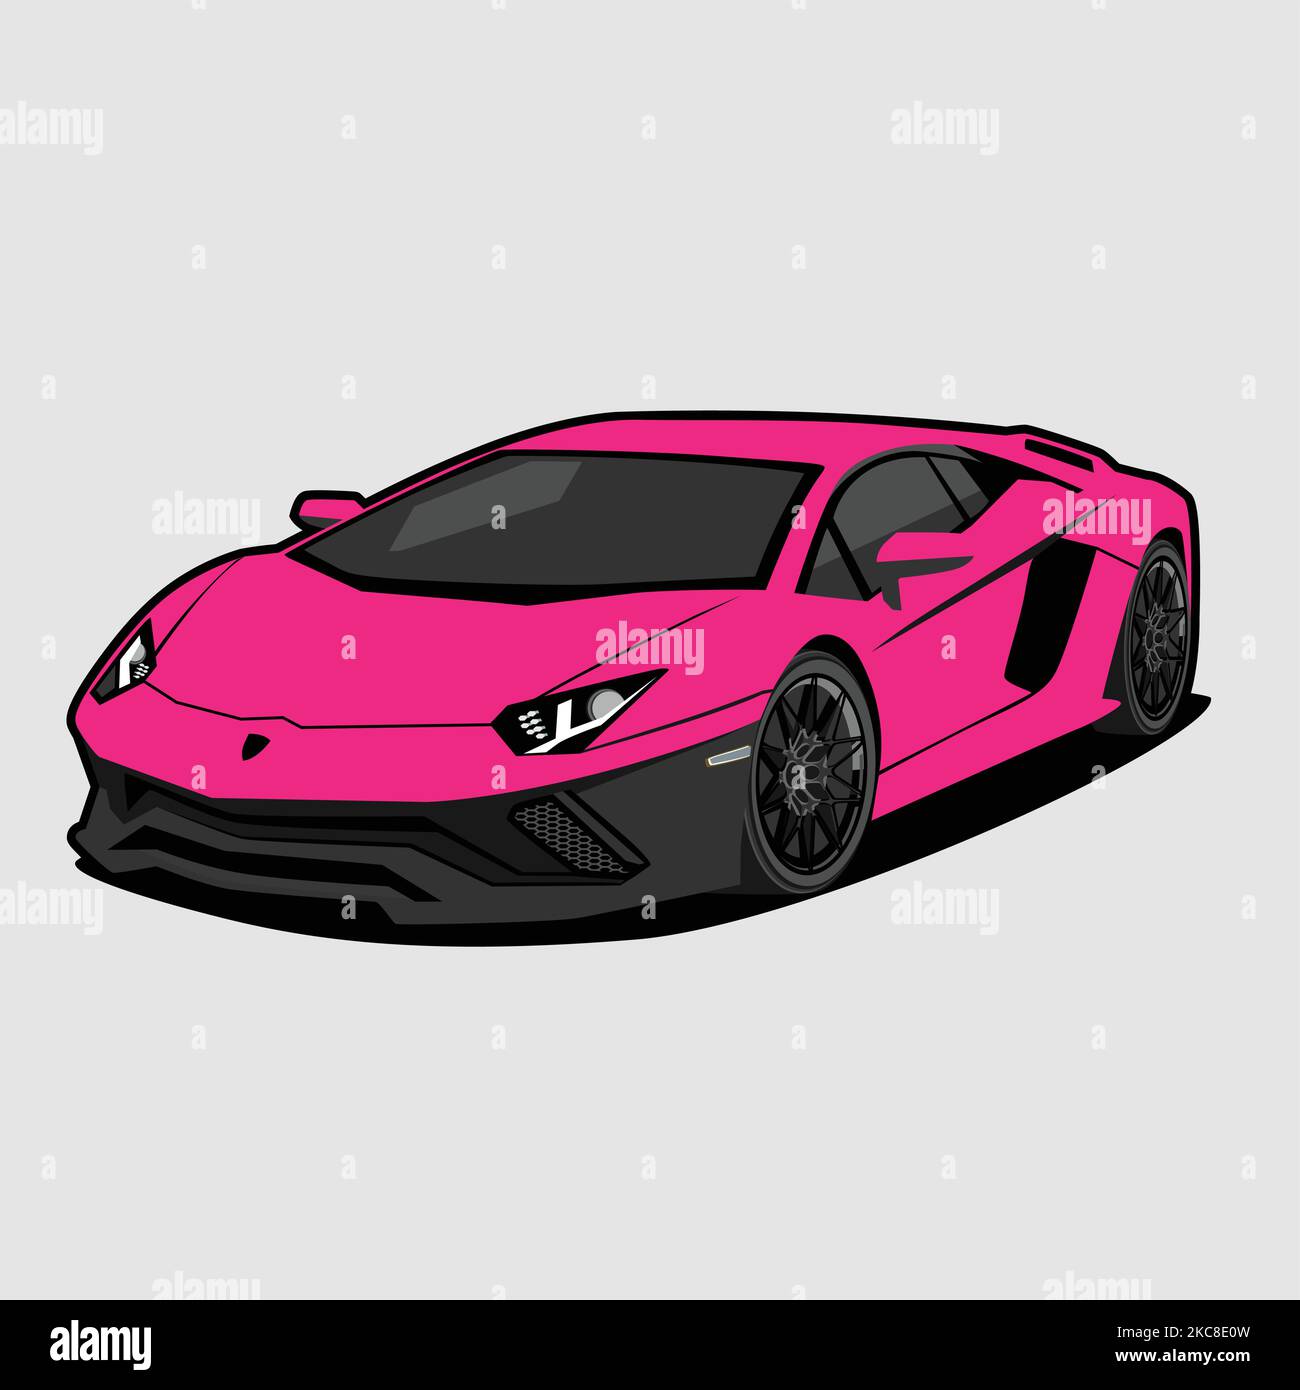 Lamborghini aventador eps-Format. Hochauflösende Vektordatei. Jetzt herunterladen Stock Vektor